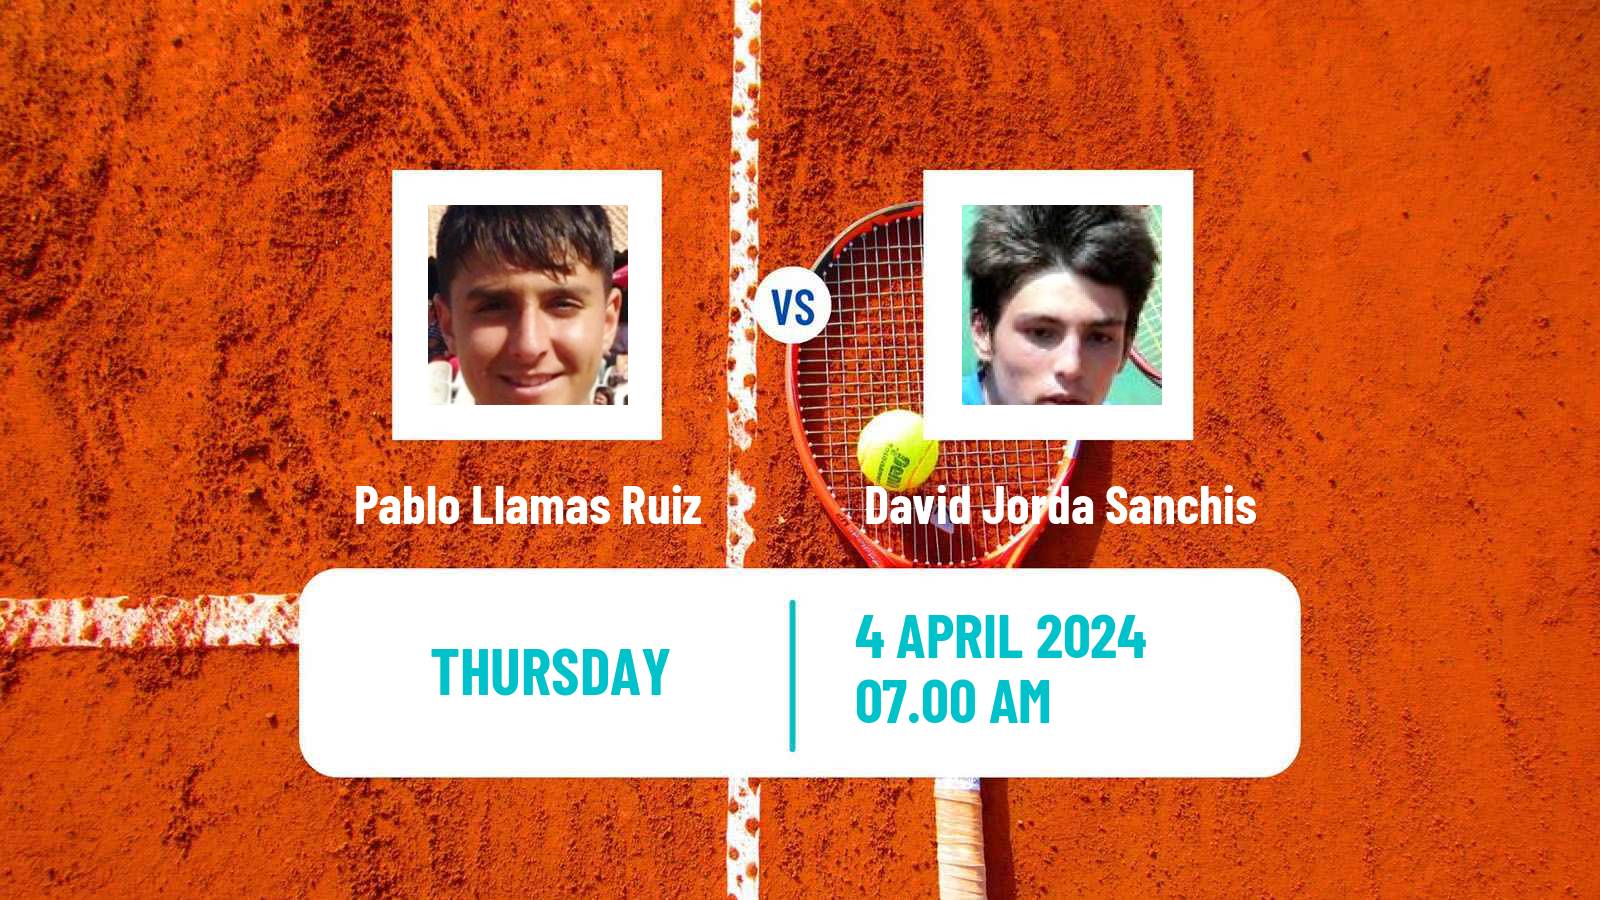 Tennis ATP Estoril Pablo Llamas Ruiz - David Jorda Sanchis